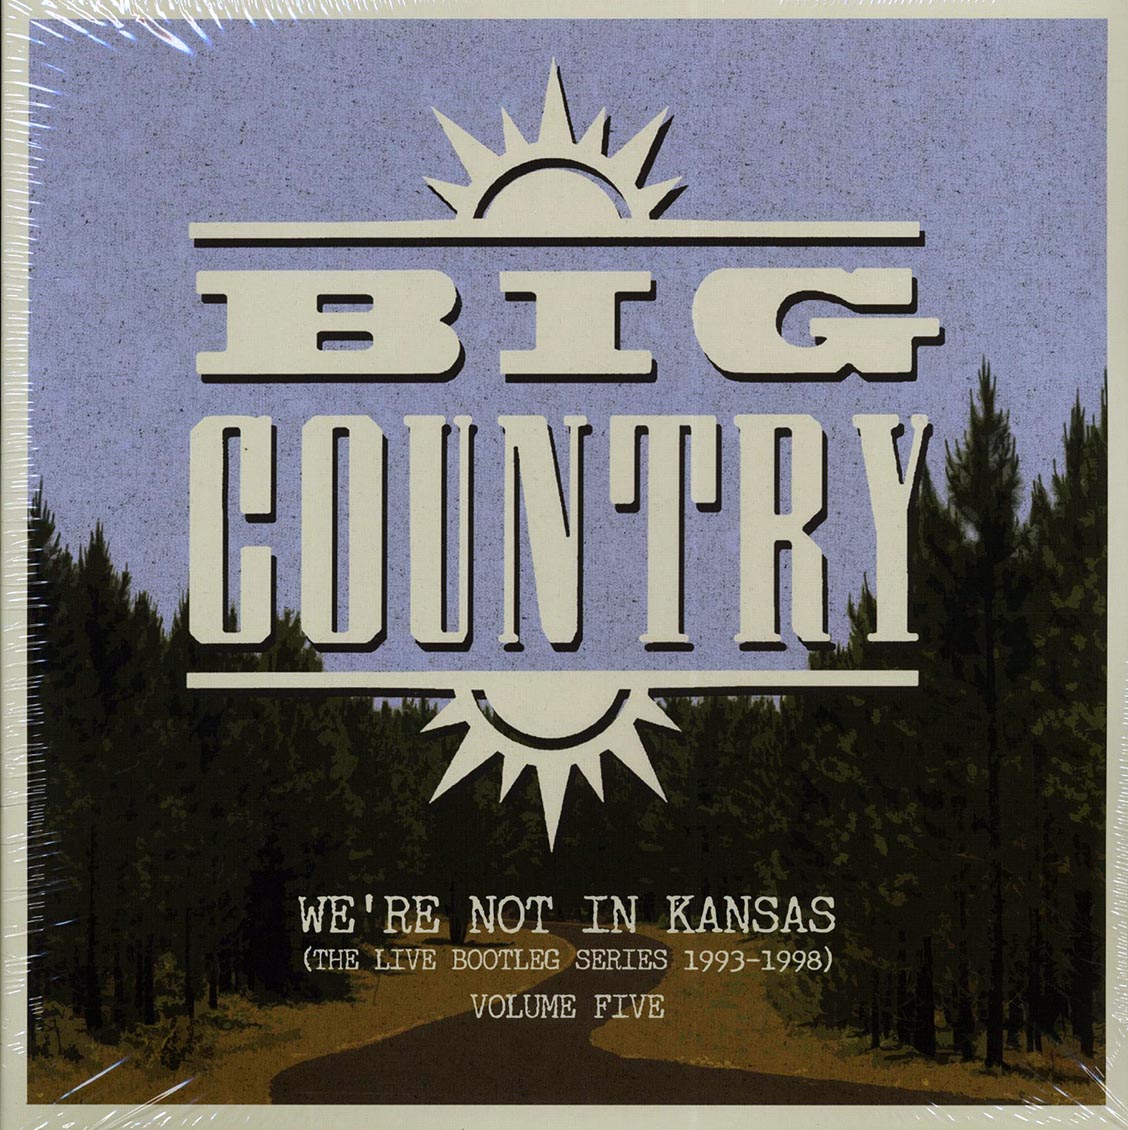 Big Country - We're Not In Kansas: The Live Bootleg Series 1993-1998 Volume 5 (ltd. ed.) (2xLP) (blue vinyl) - Vinyl LP